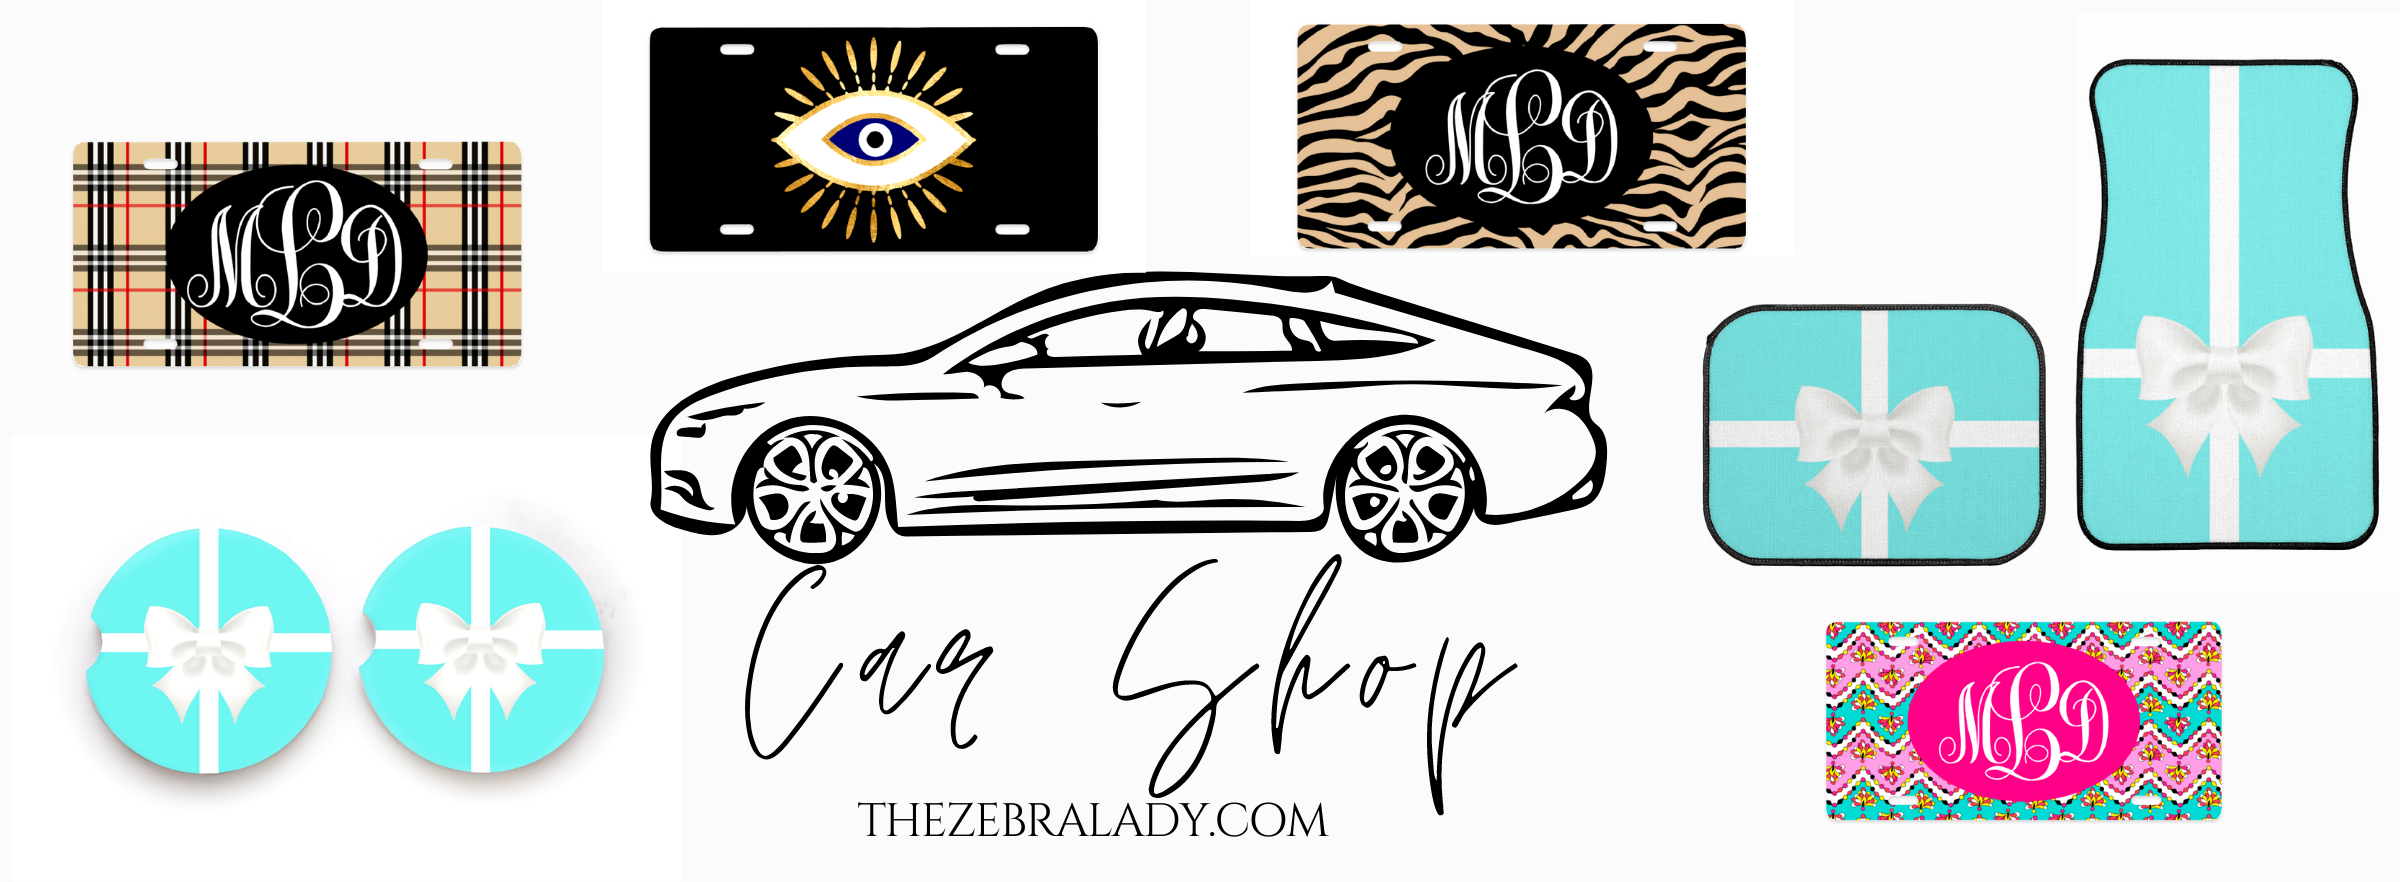 _The Zebra lady  car shop  banner.png